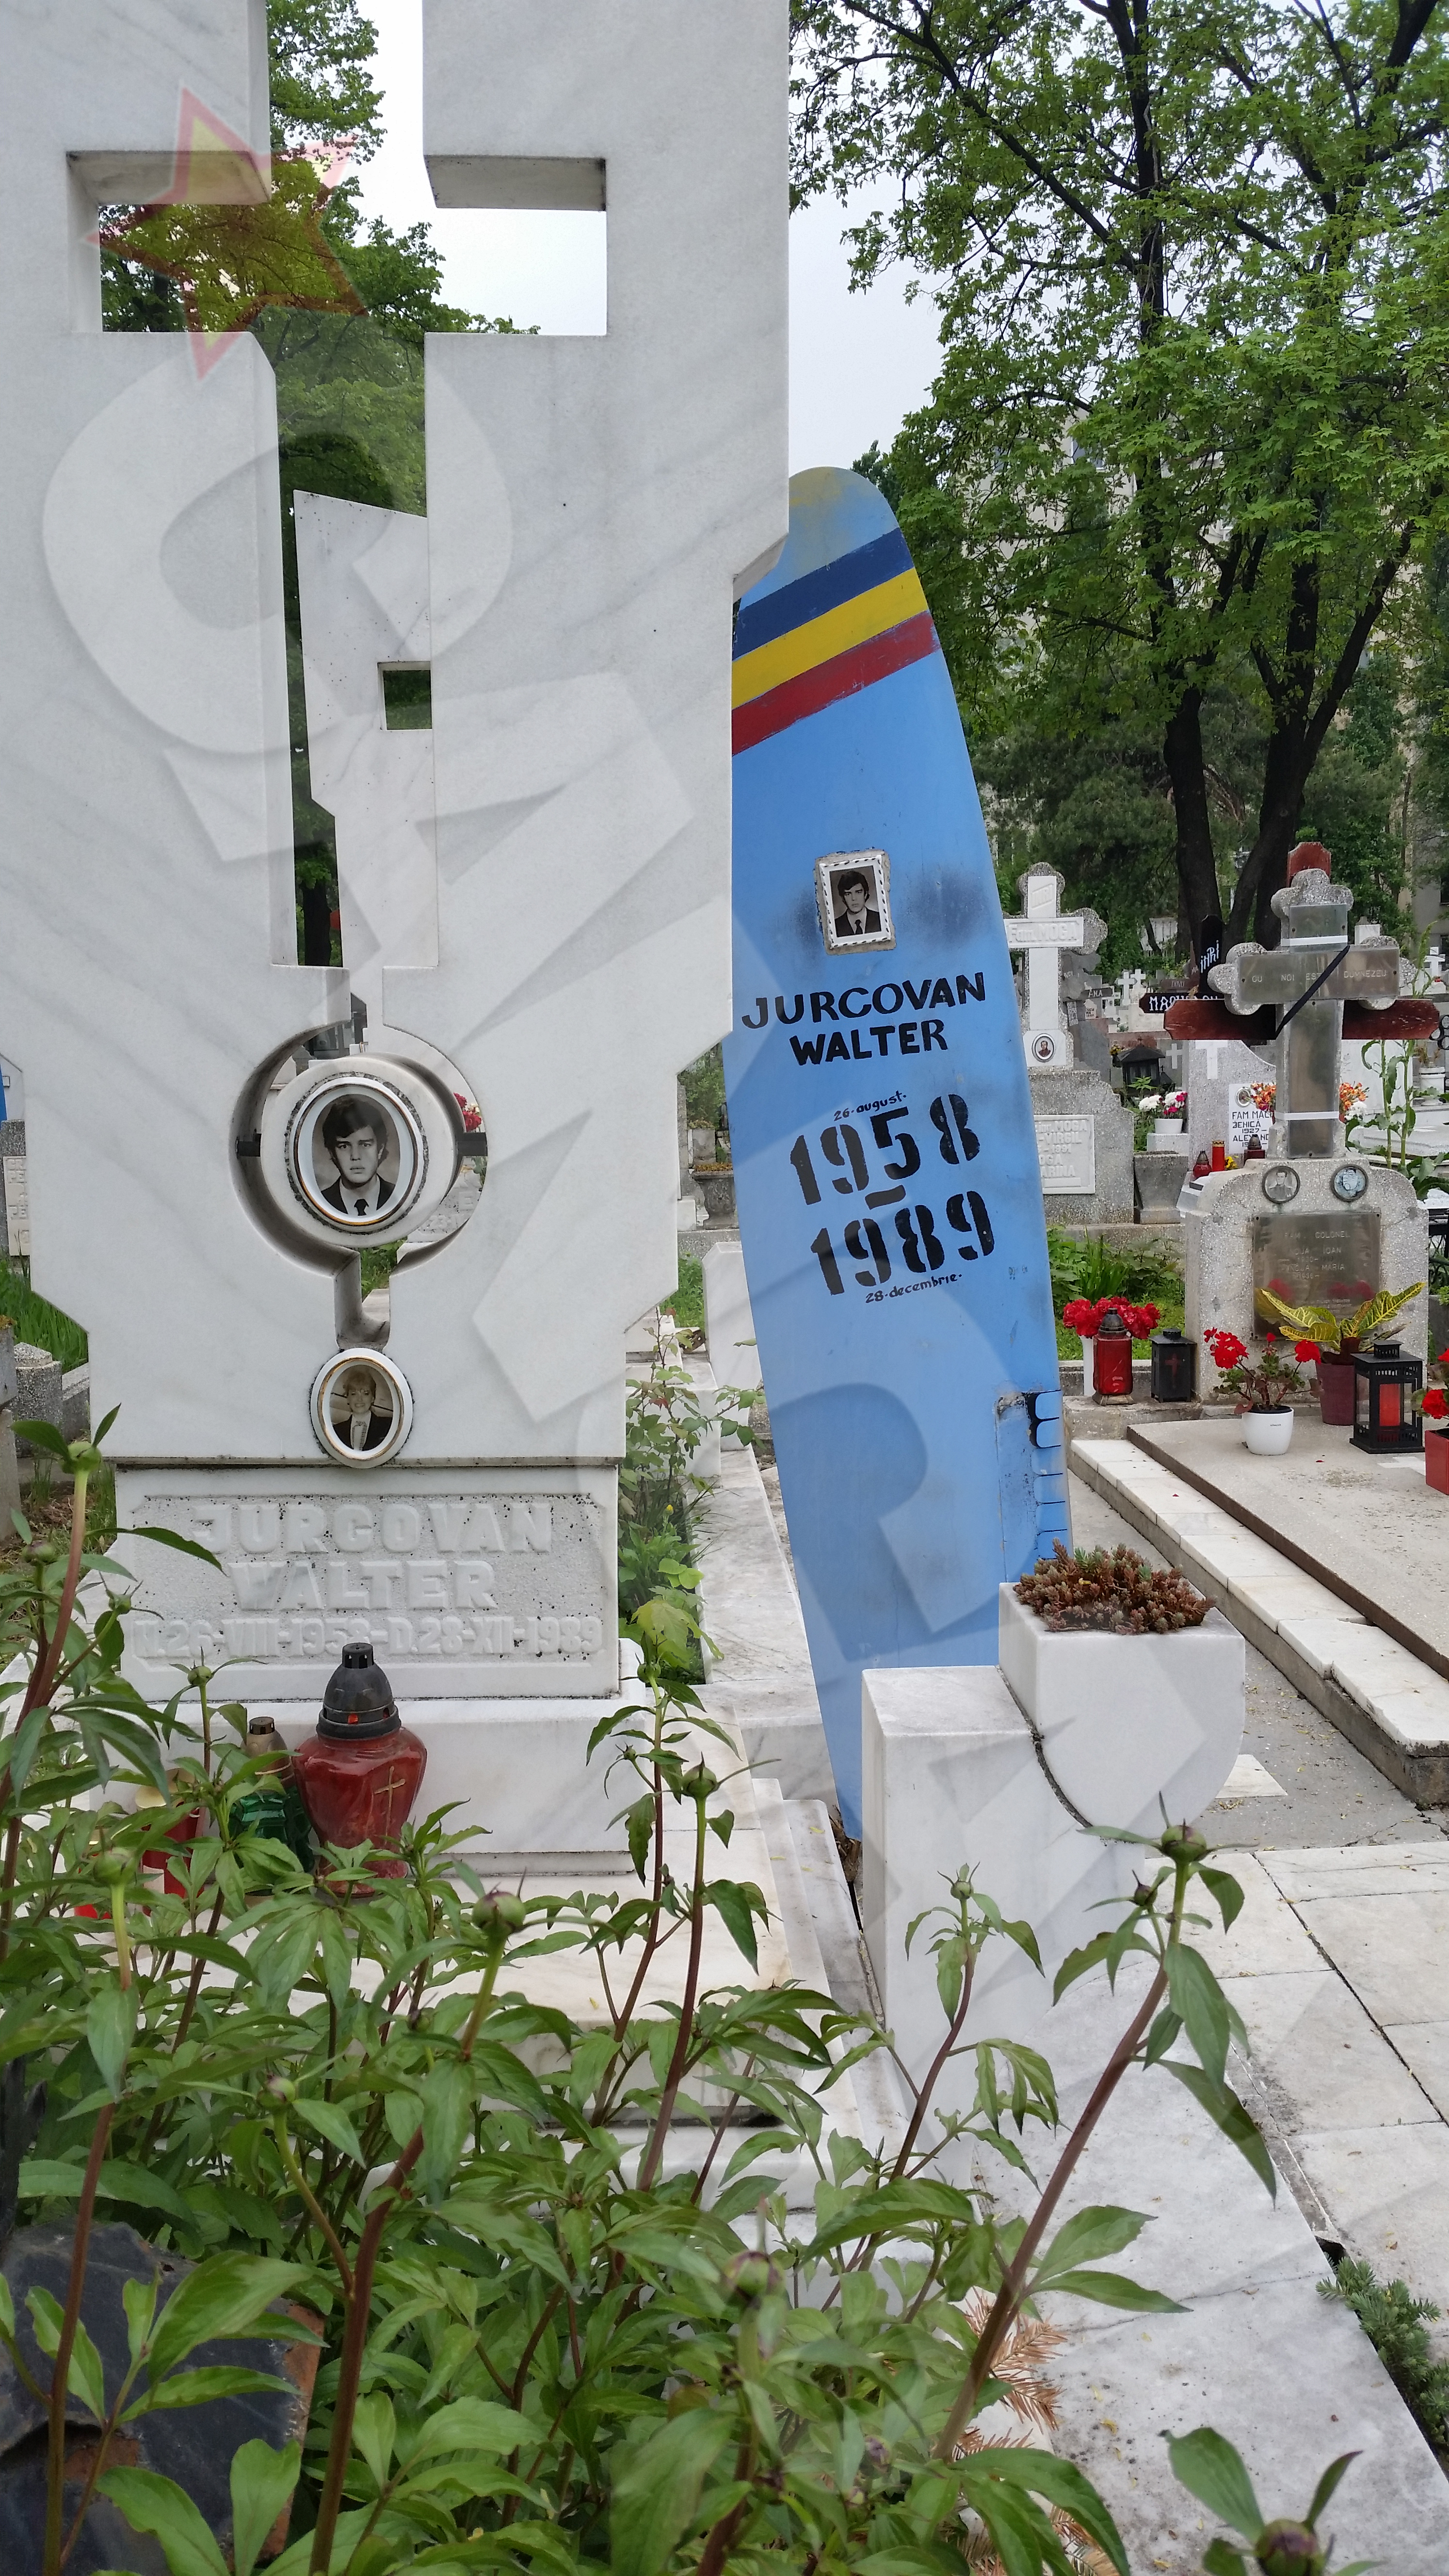 Stewardesa Doina Jurcovan a fost inmormantata in cimitirul Ghencea Militar langa sotul ei, pilotul Valter Jurcovan, decedat, de asemenea, in '89, intr-o tragedie aeriana